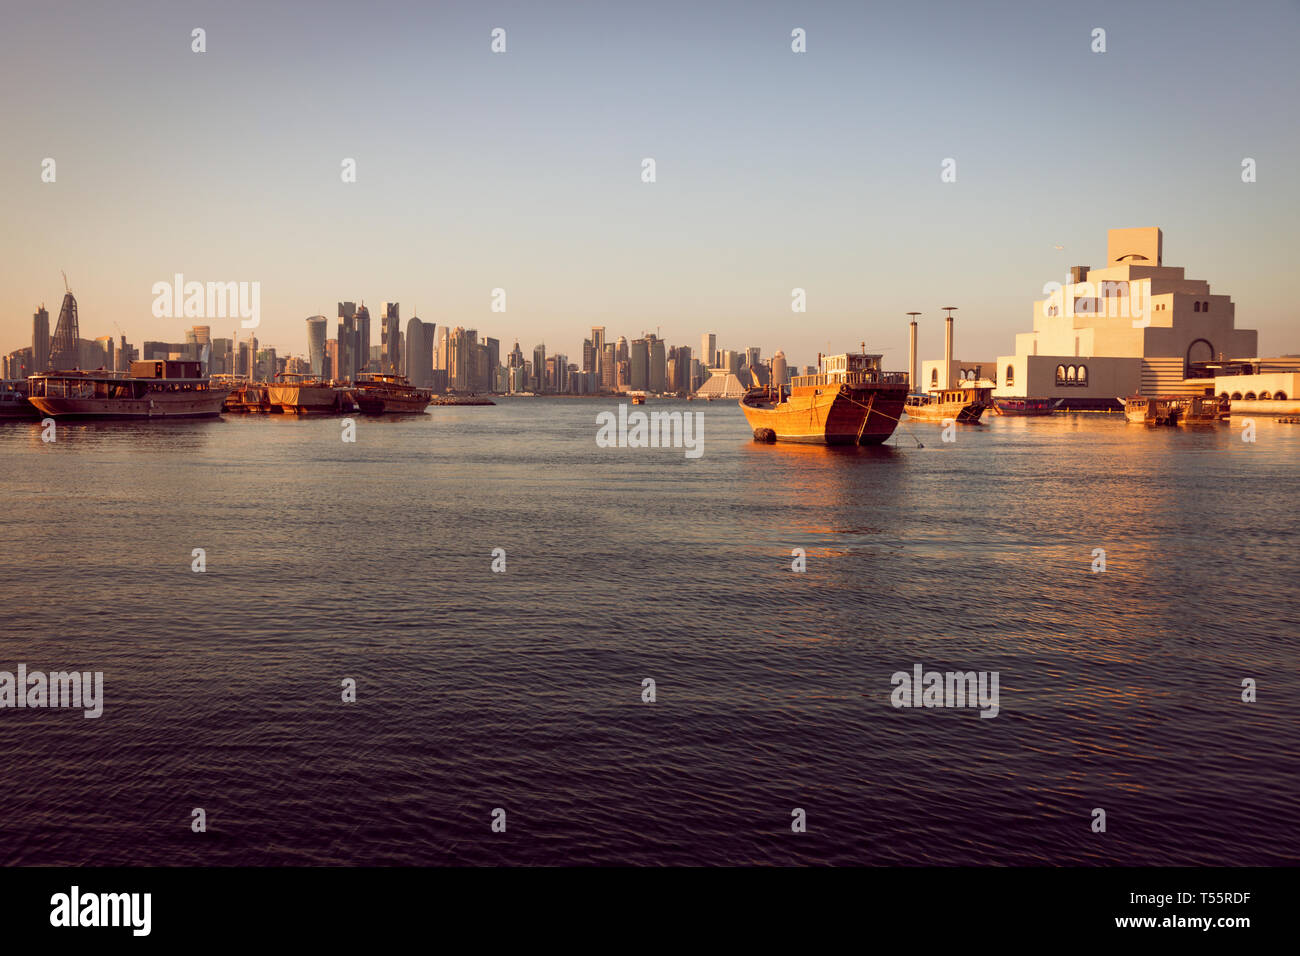 Puerto por skyline de Doha, Qatar Foto de stock